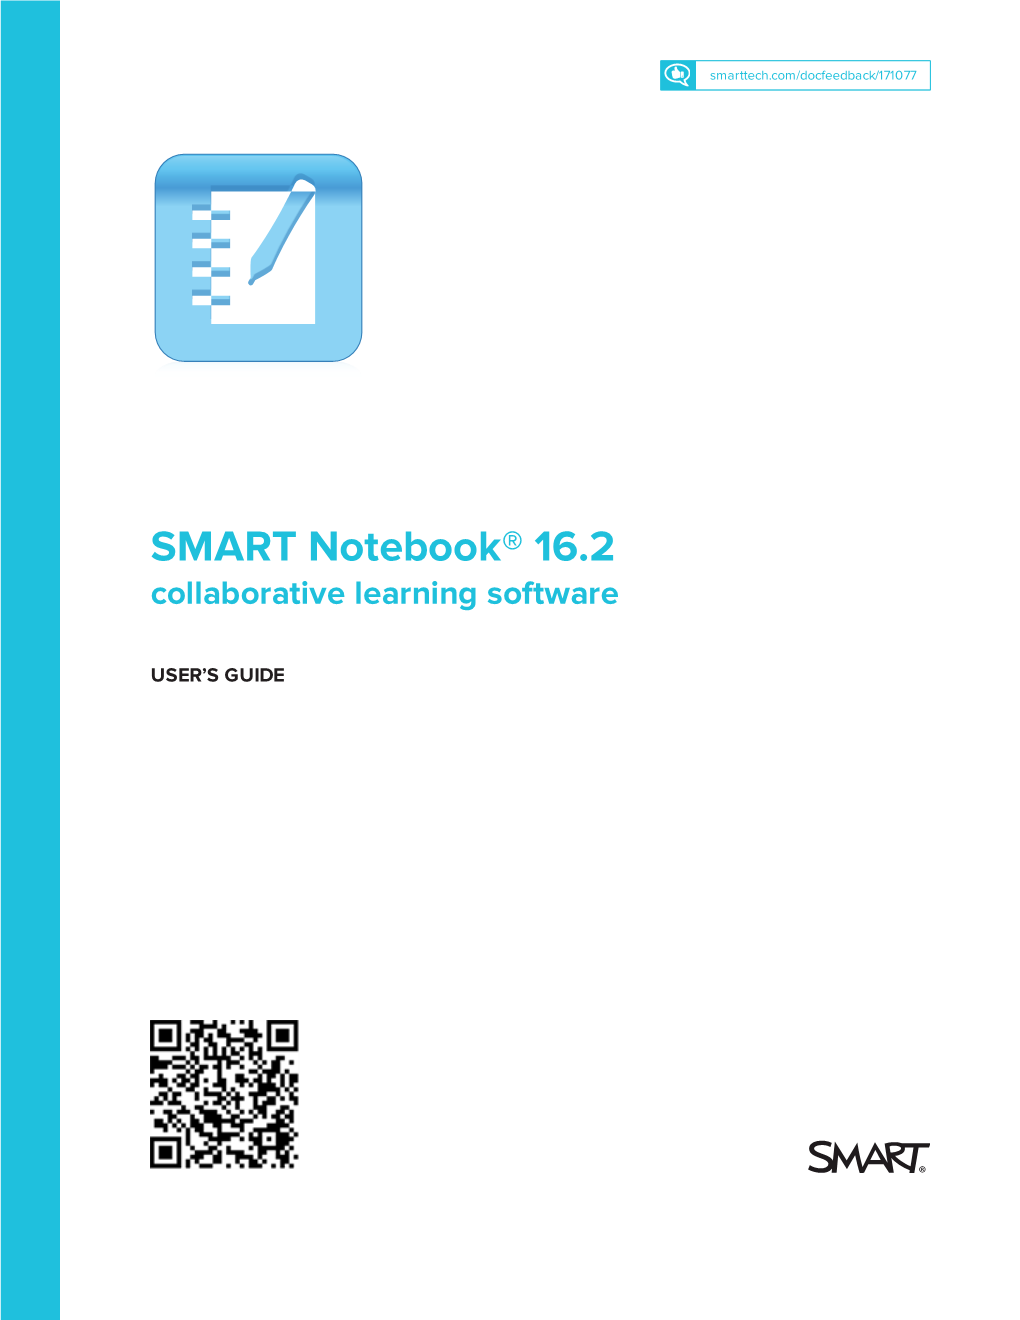 SMART Notebook 16.2 User's Guide